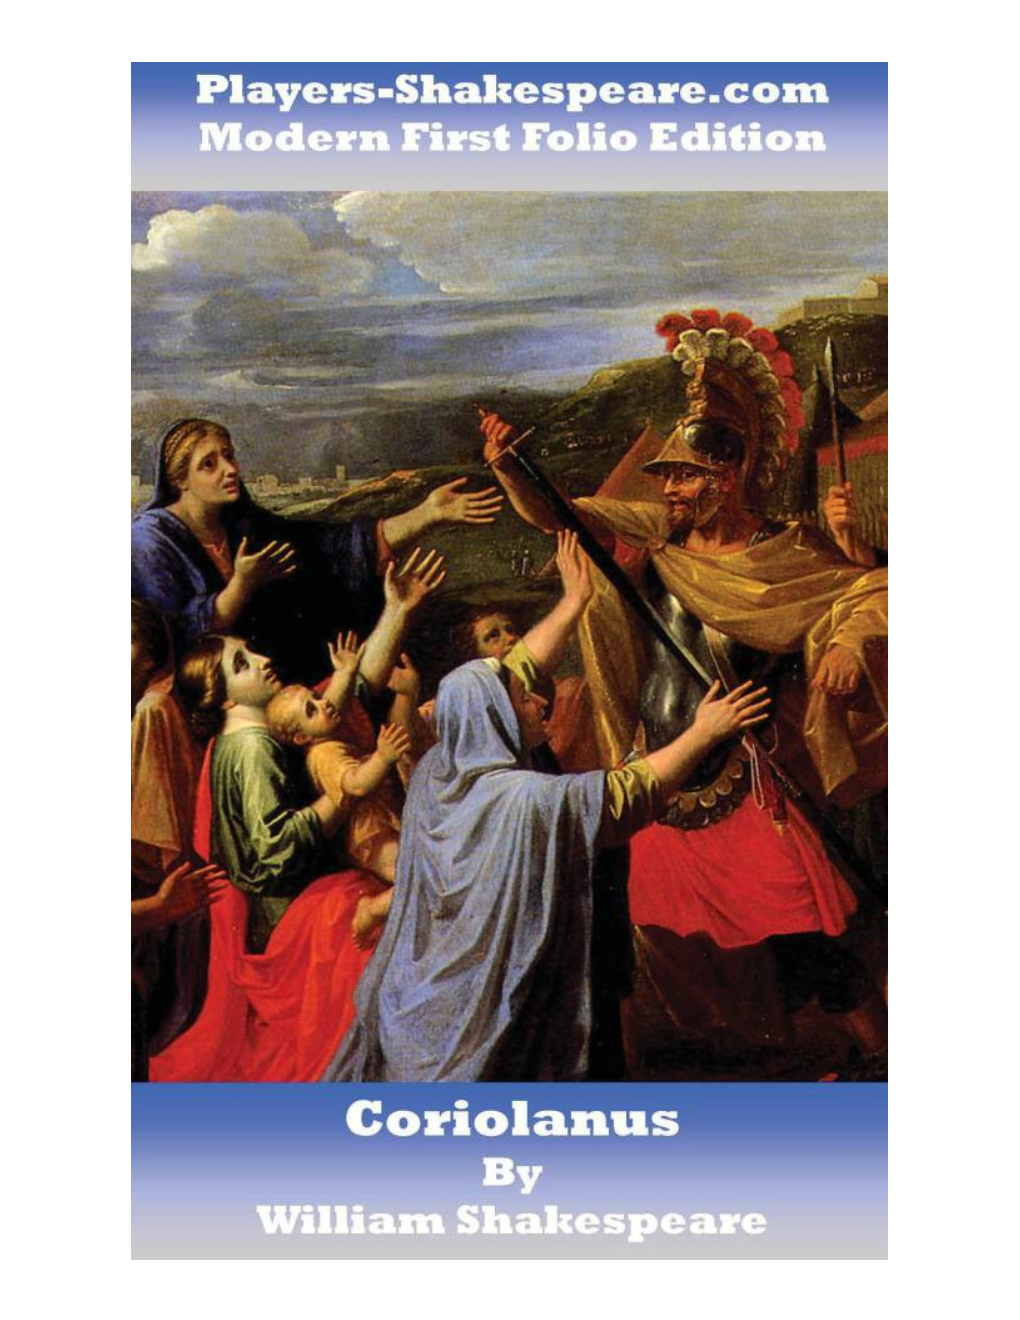 Coriolanus MFFE Version 2.5 with No Notes